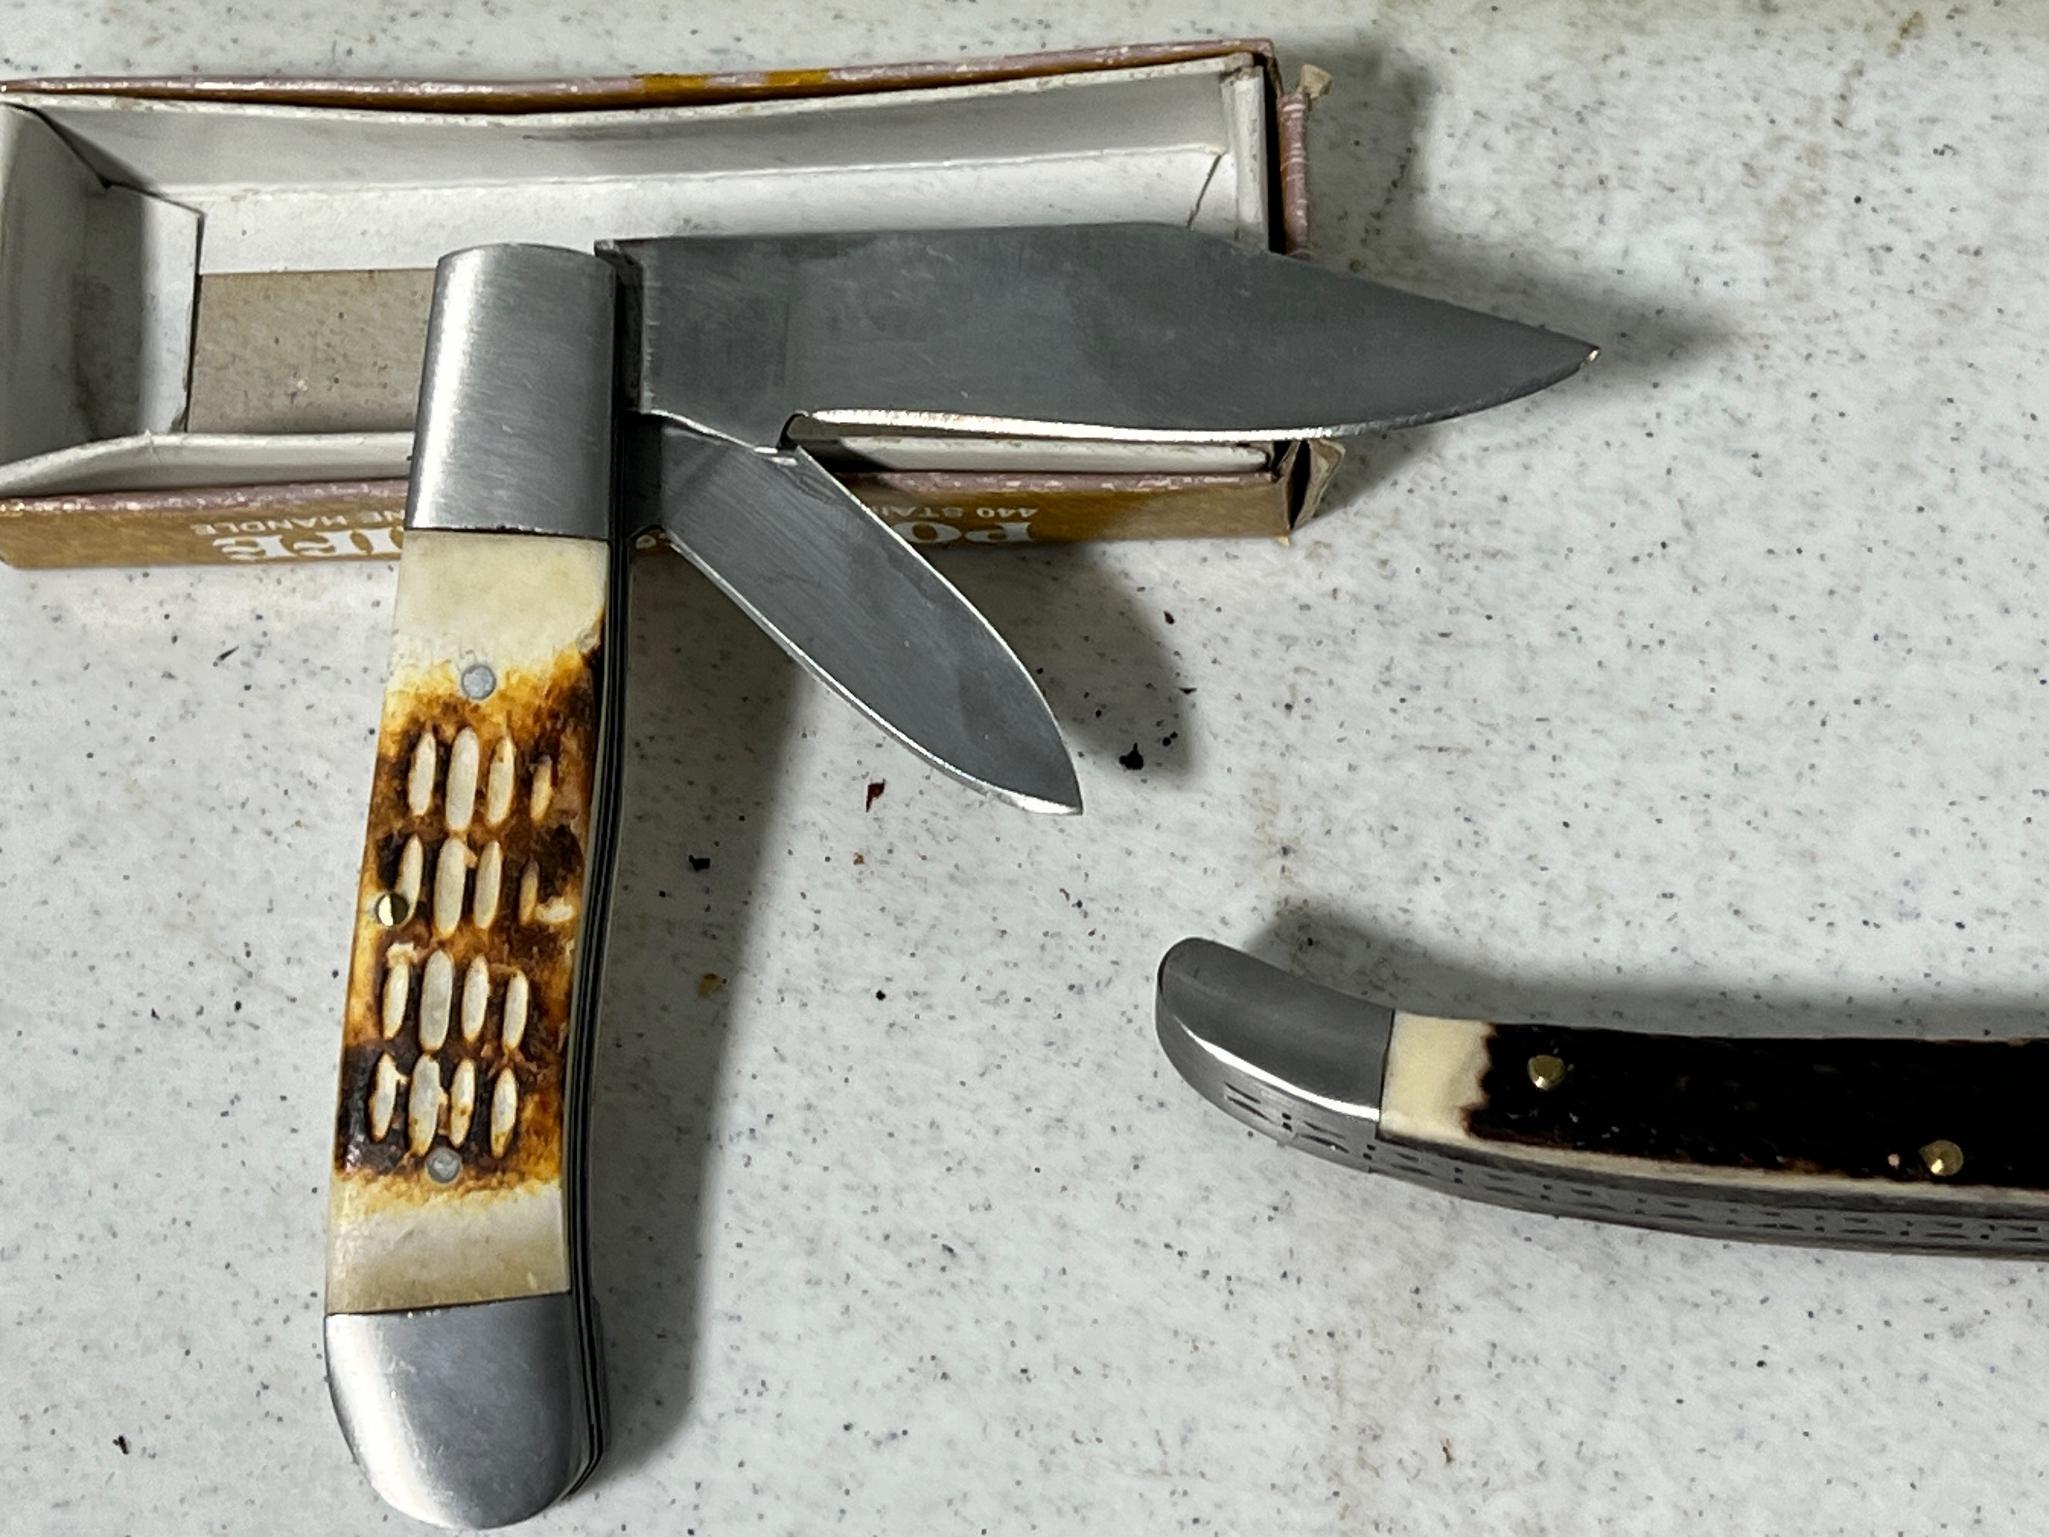 Damascus Folding Knife w/ 5" blade + Twin Tree Double Blade Pocket Knife appear unused